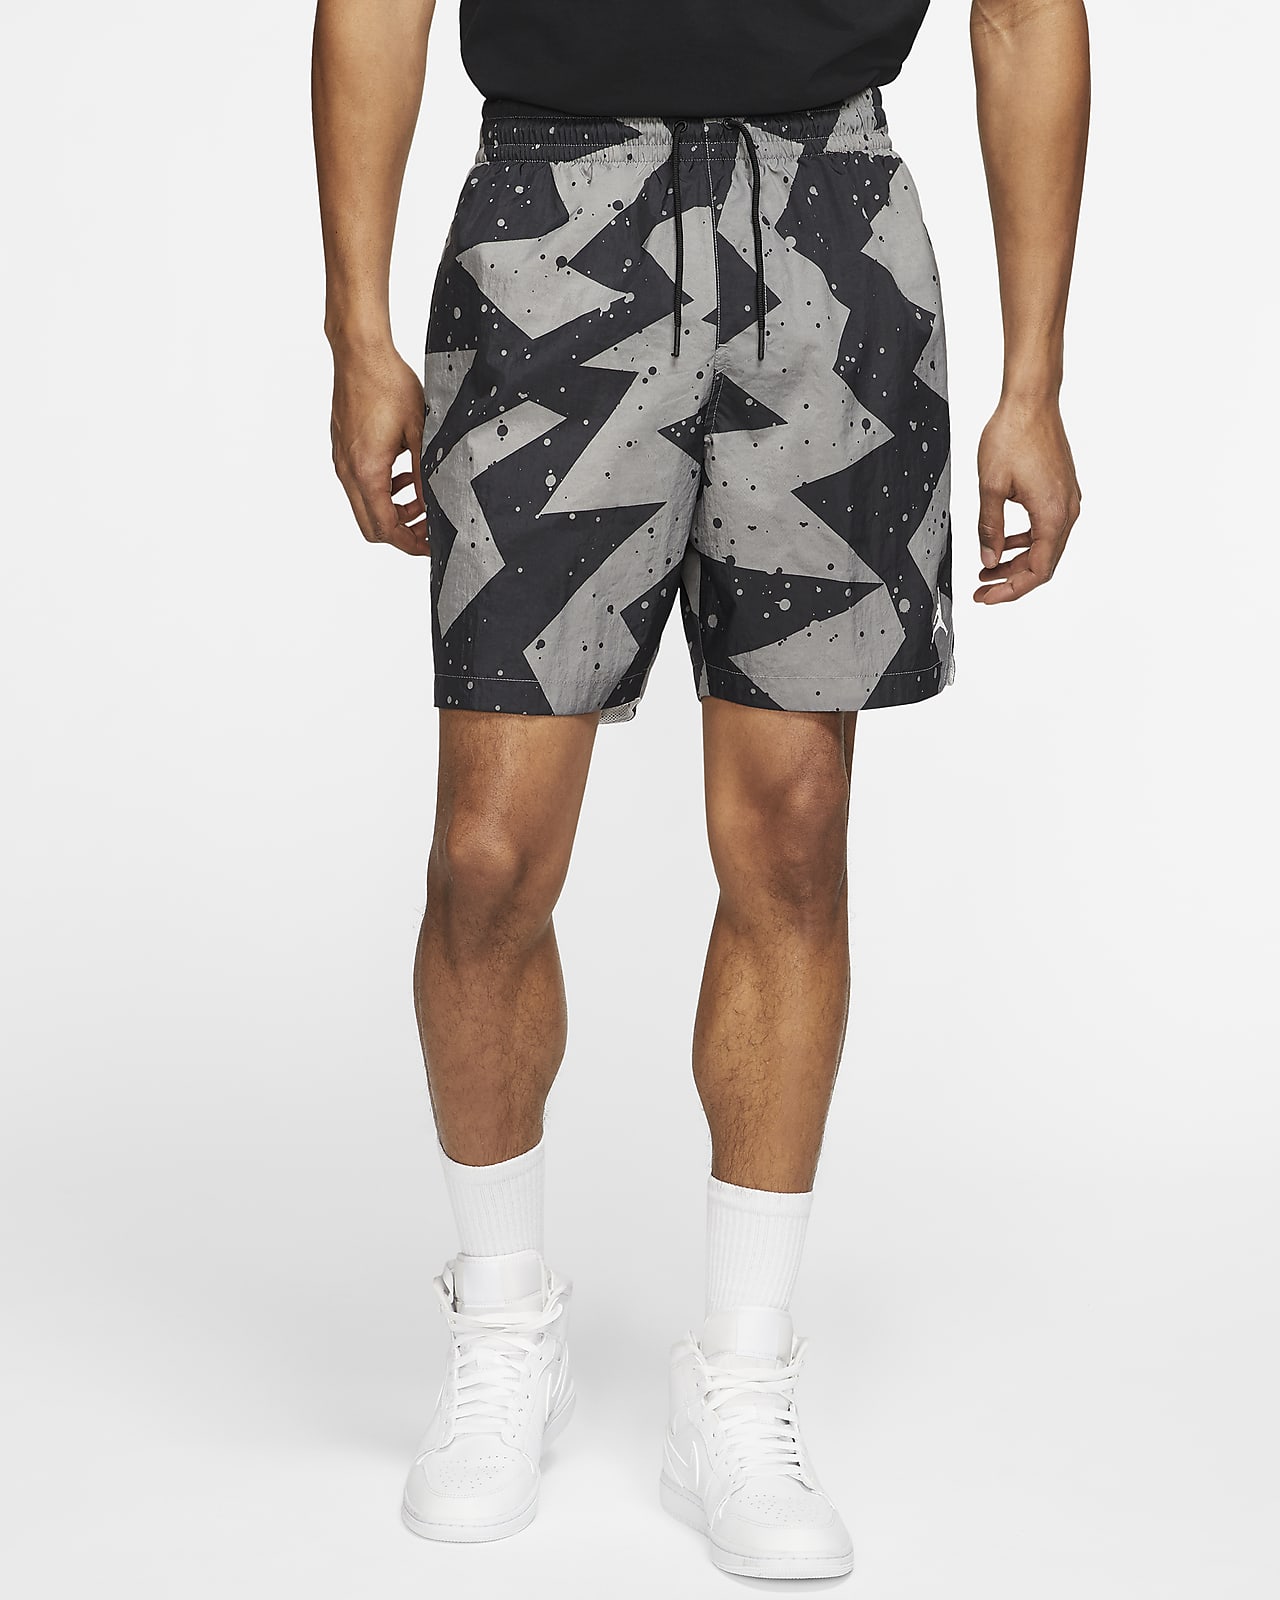 18cm (approx.) Shorts. Nike LU